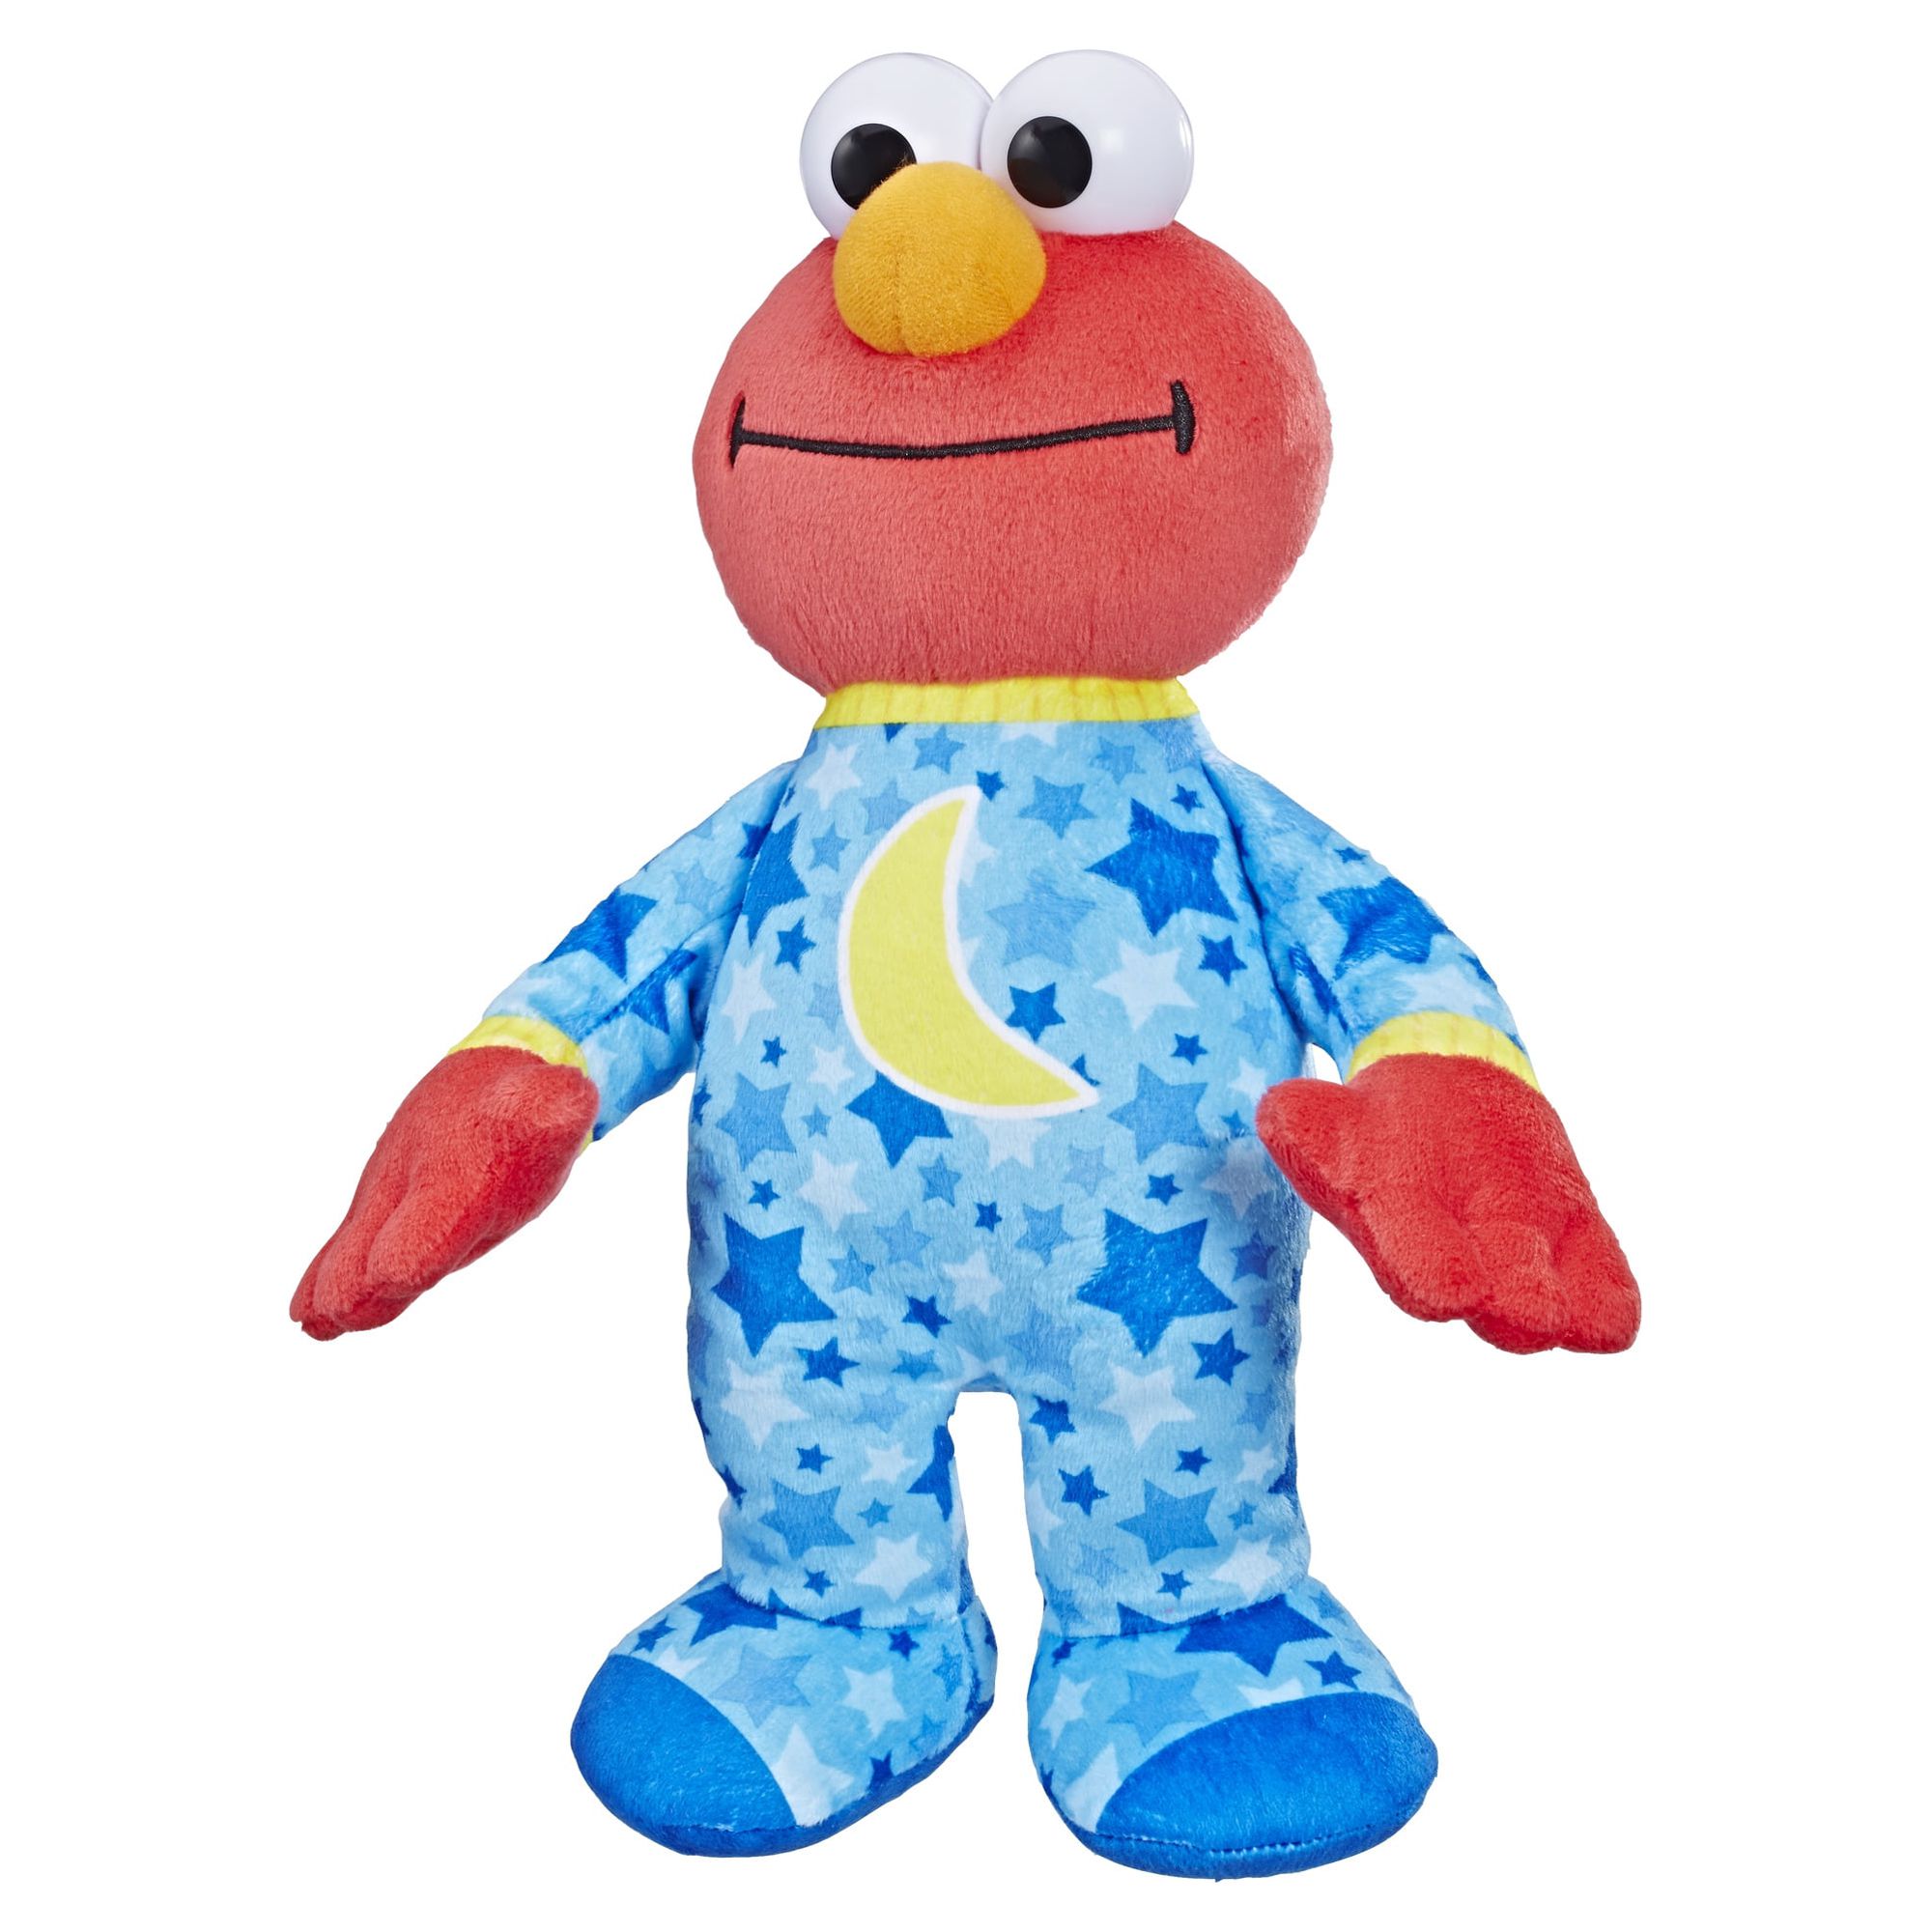 Sesame Street 12.99" Playskool Lullaby & Good Night Elmo Plush Toy - image 1 of 7